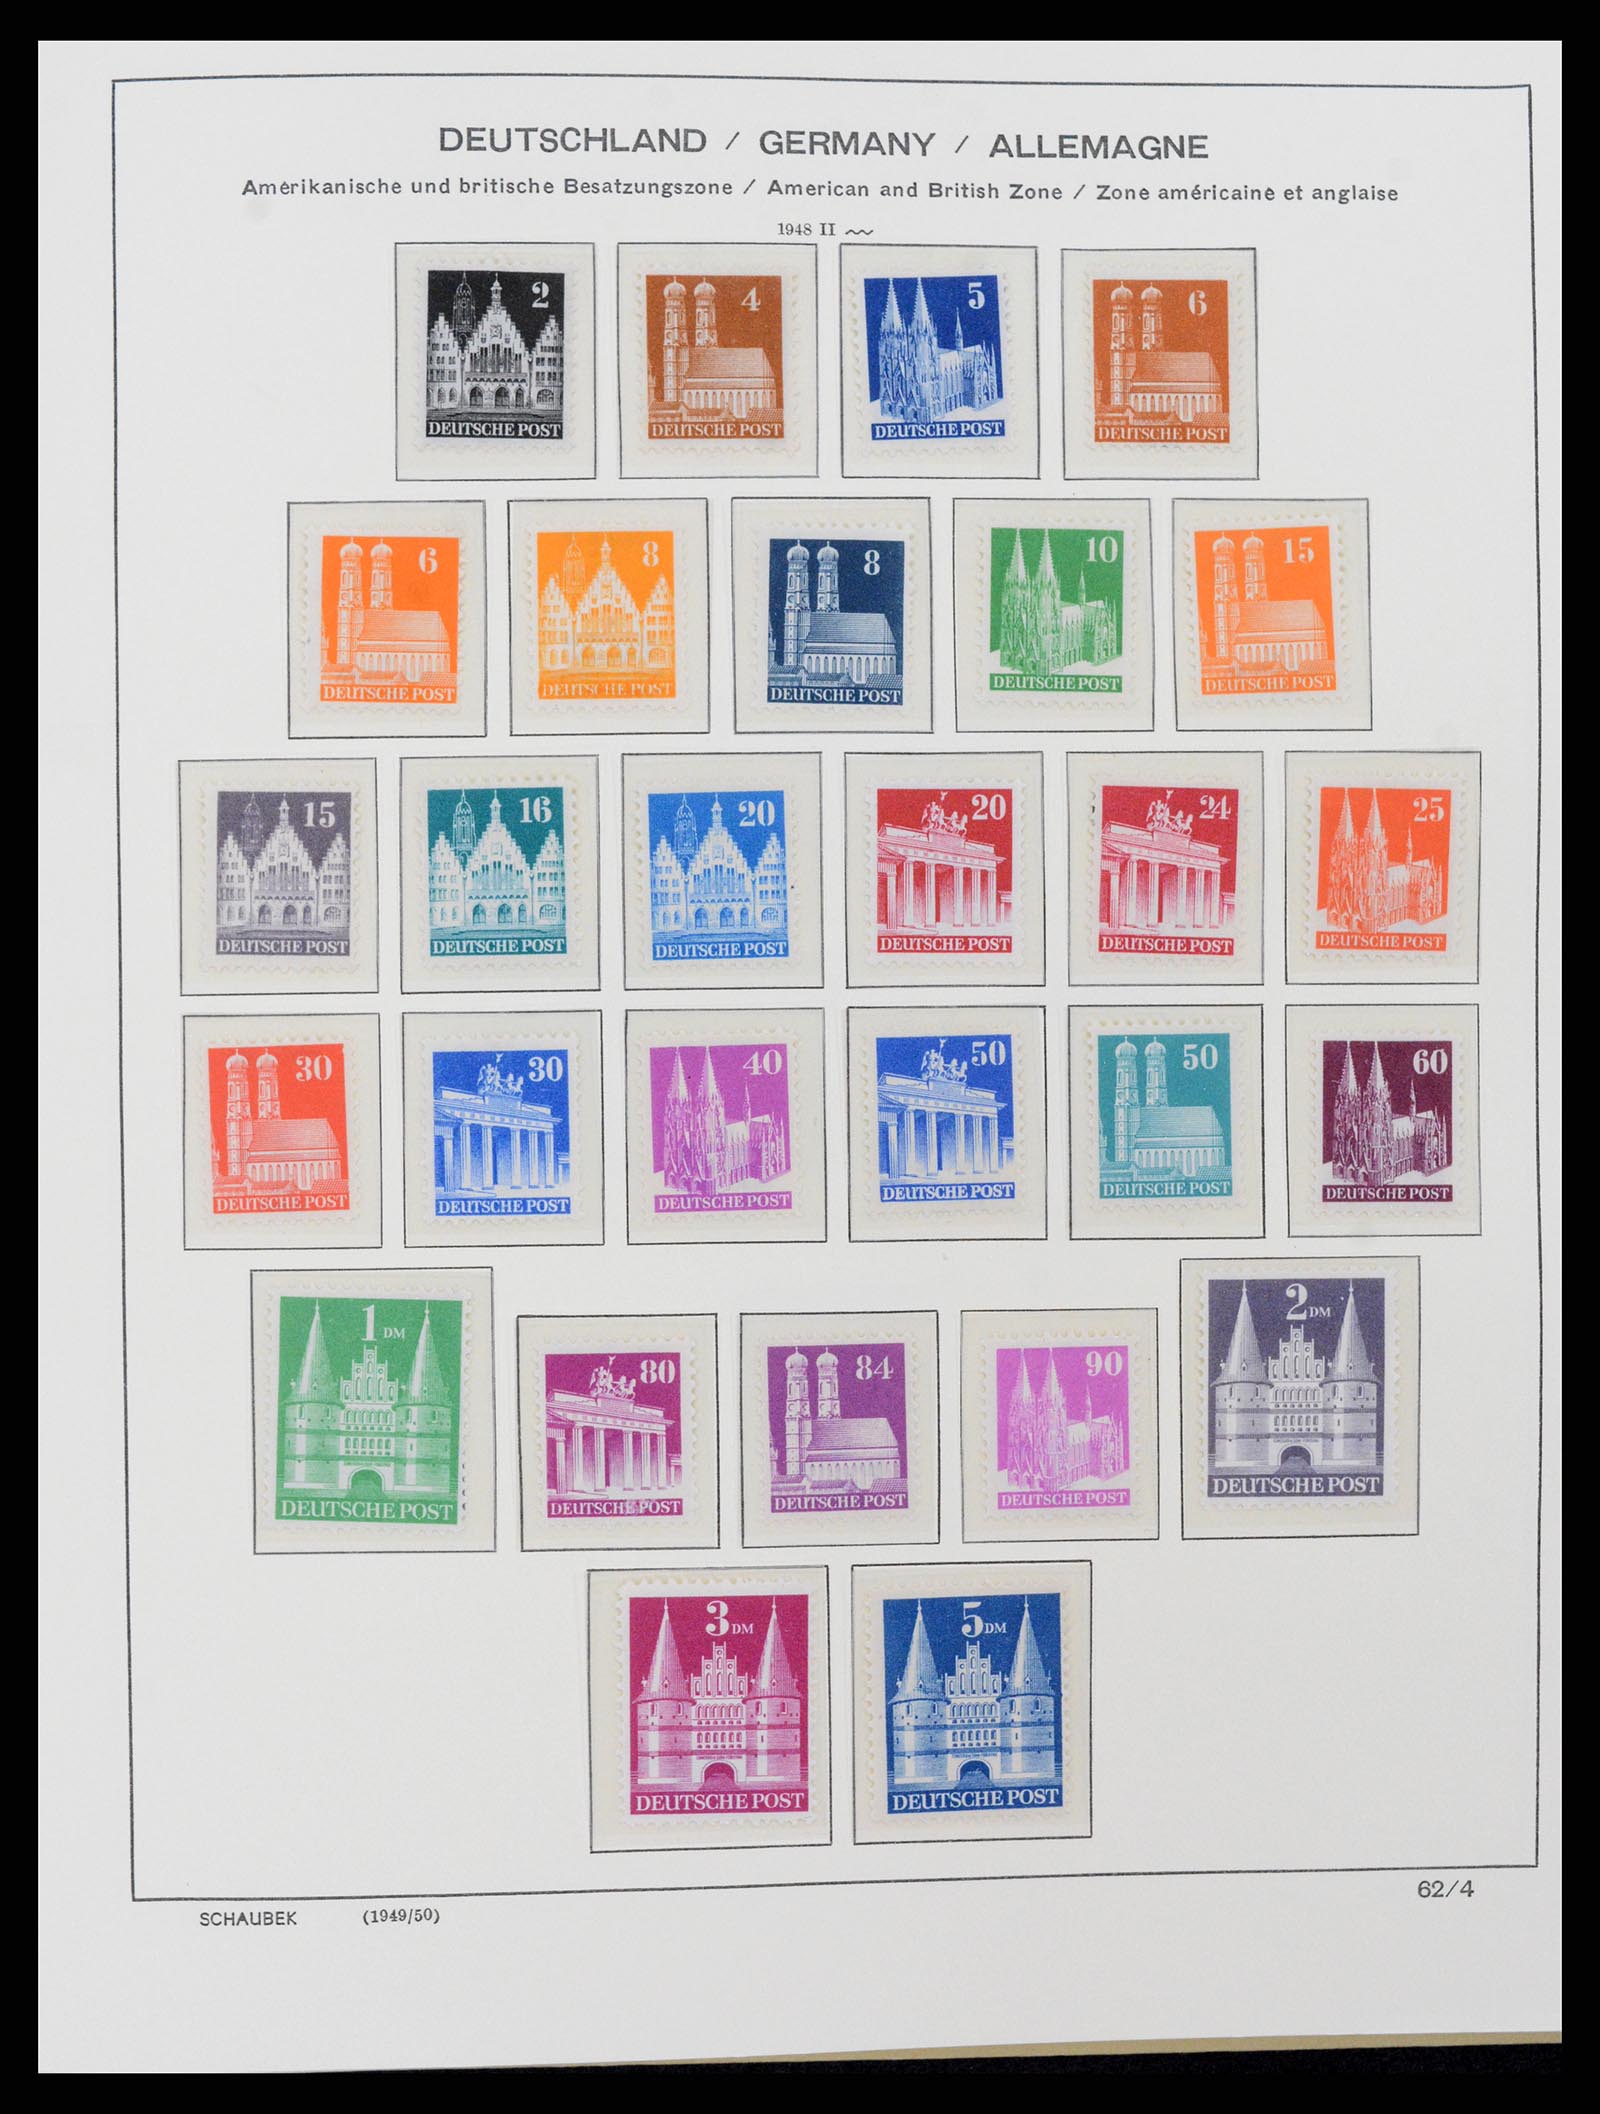 37645 013 - Stamp collection 37645 German Zones 1945-1949.